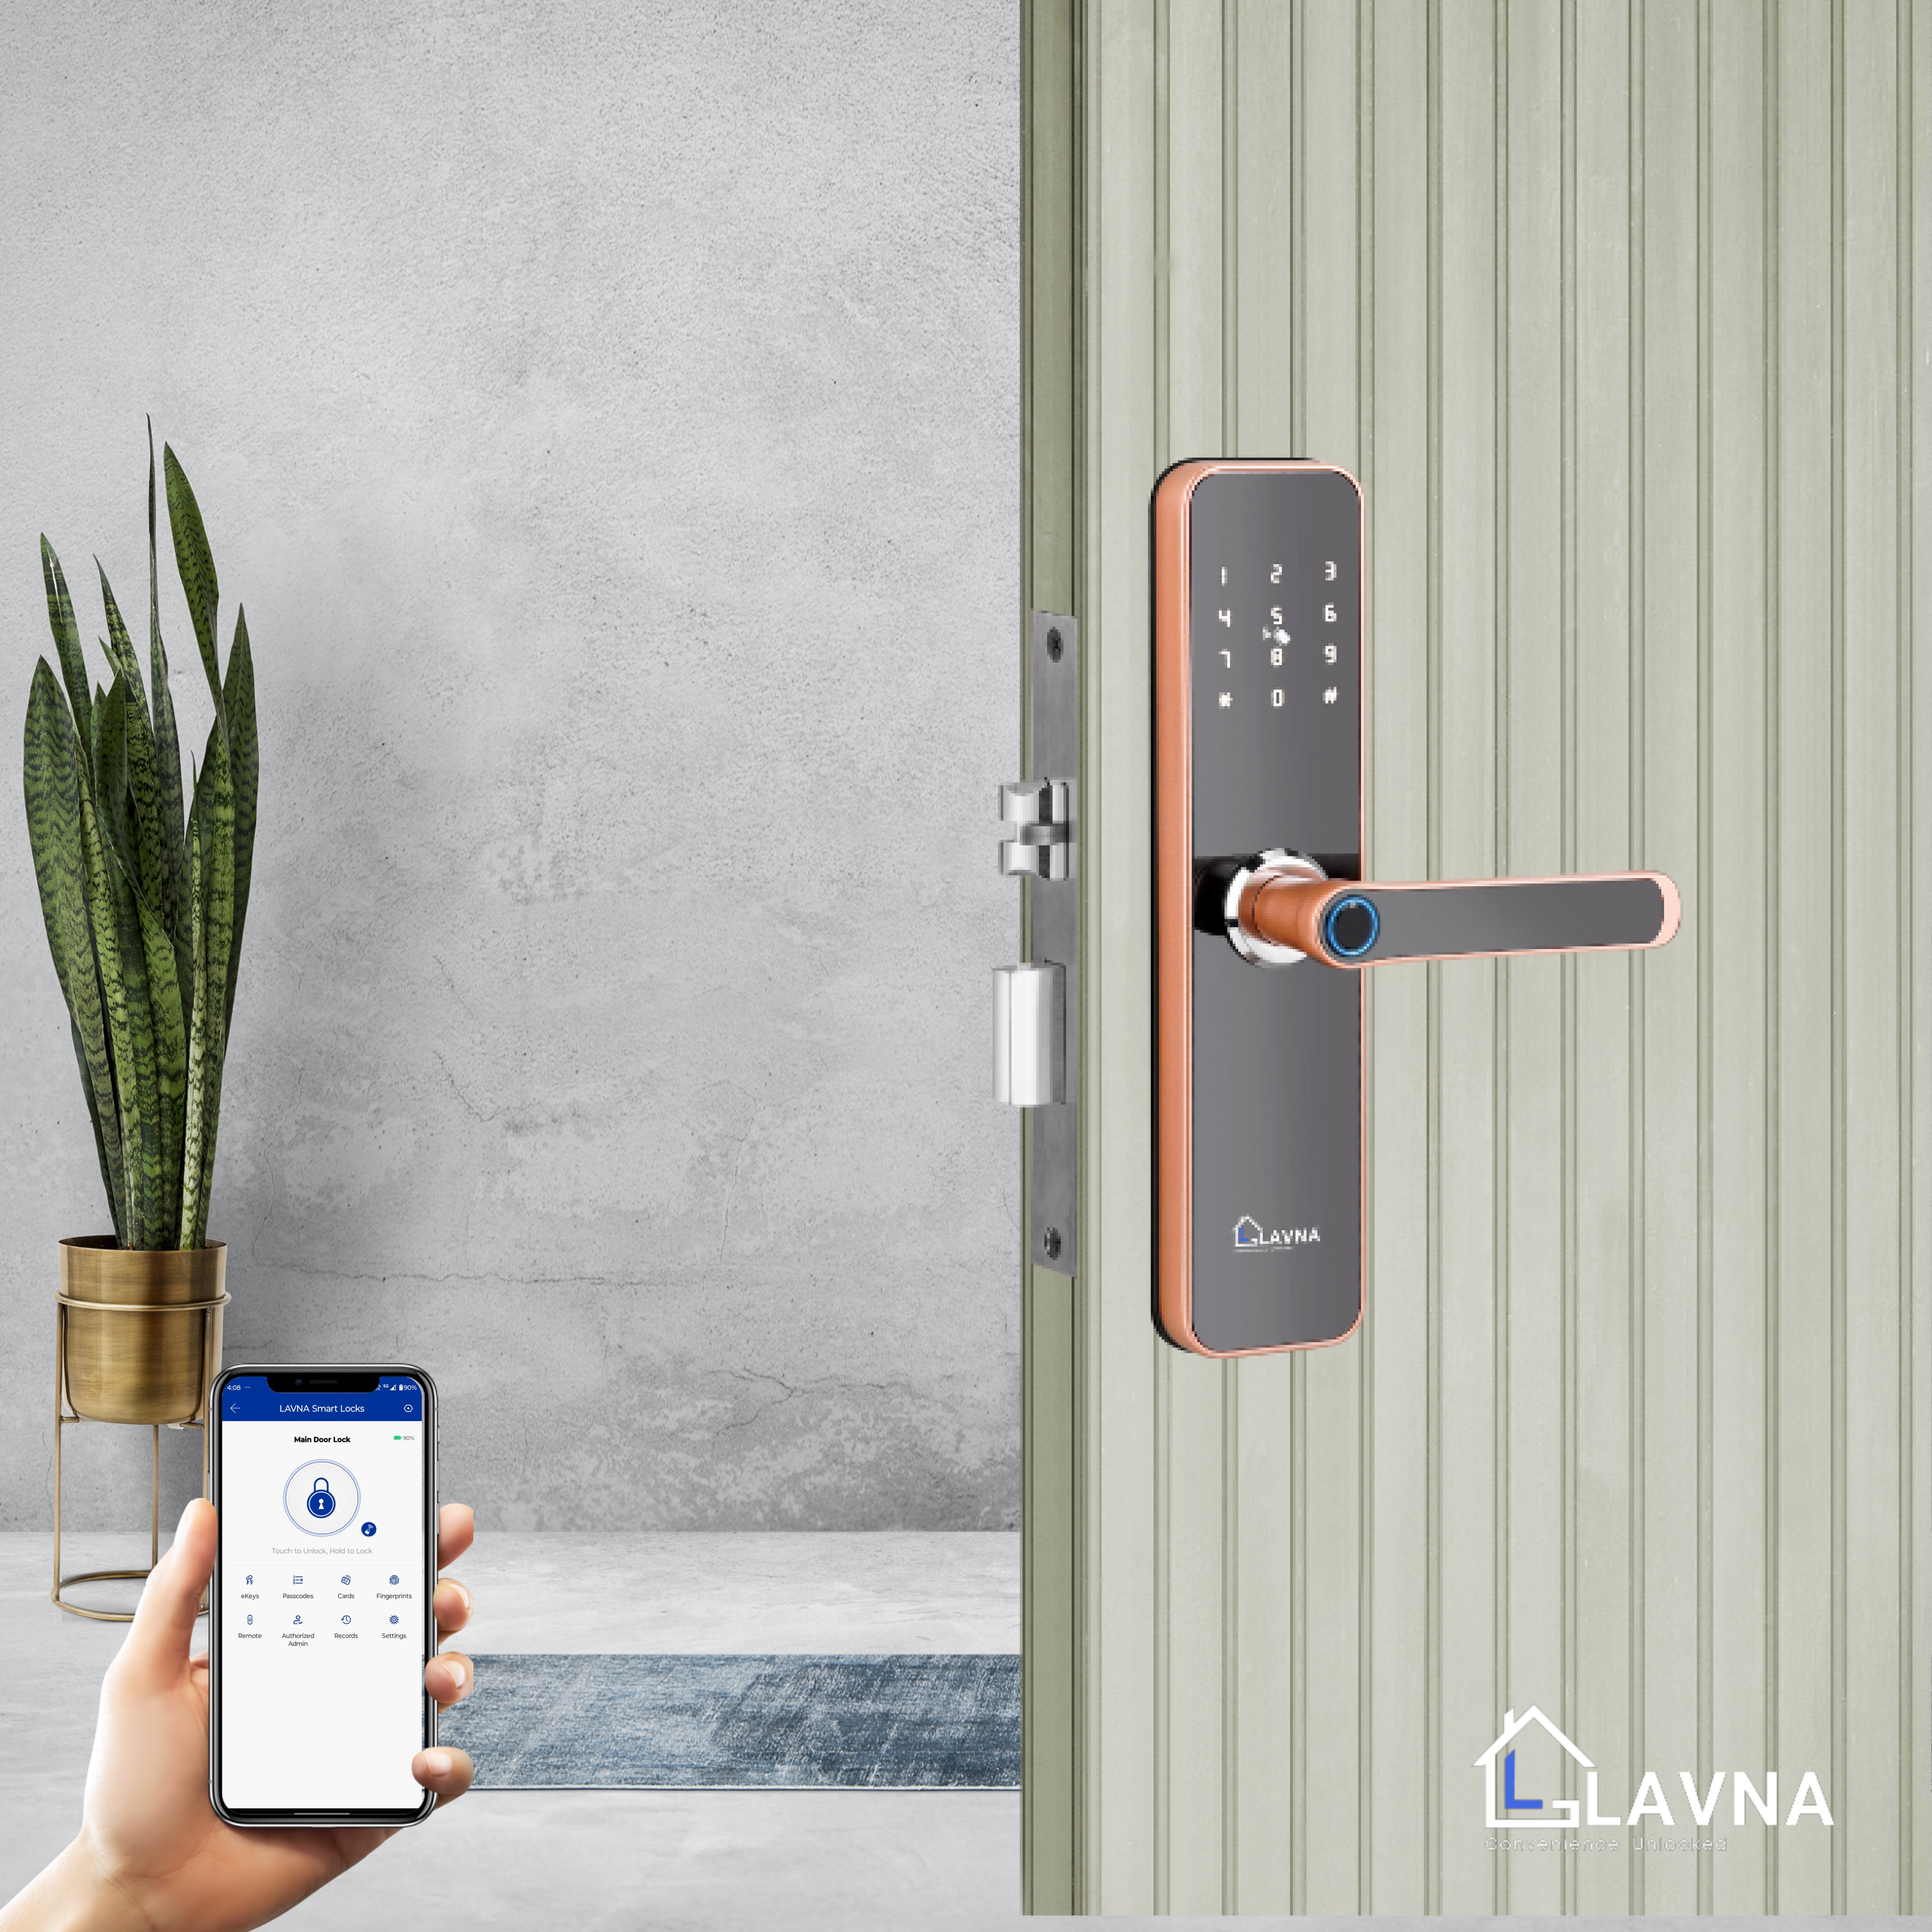 LAVNA LA28 Fingerprint Door Lock with Bluetooth Mobile App, Fingerprint, OTP, PIN, RFID Card and Manual Key 6 way Access for Wooden Doors